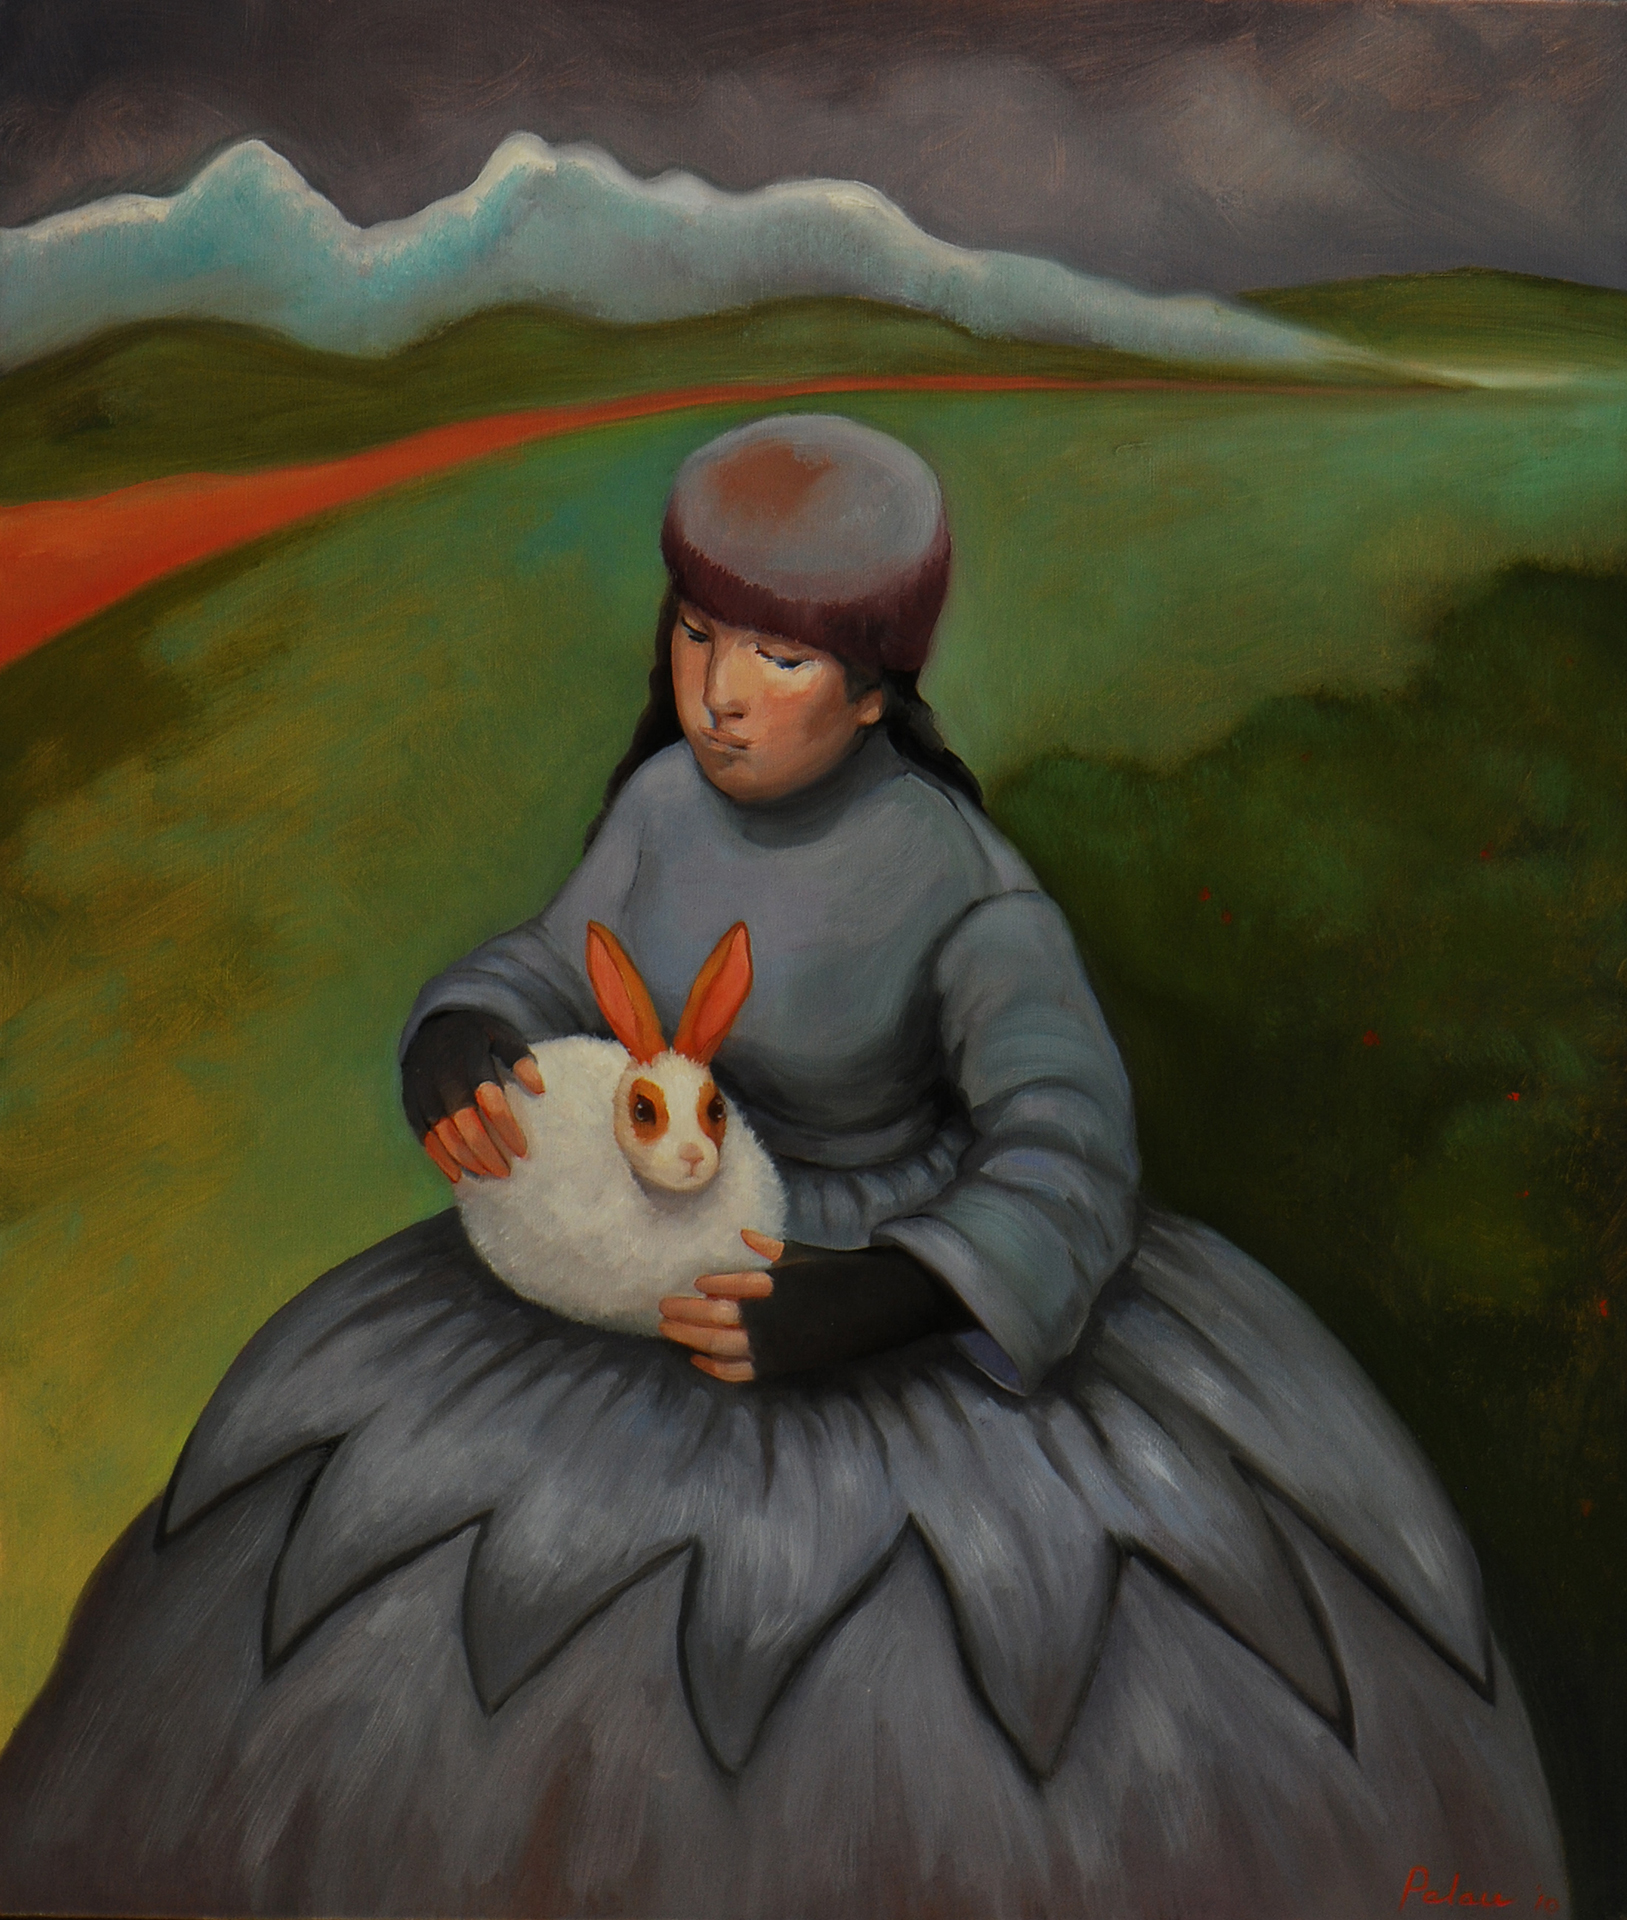 Woman with Rabbit, Fleur Palau - oil on canvas, 24 x 22